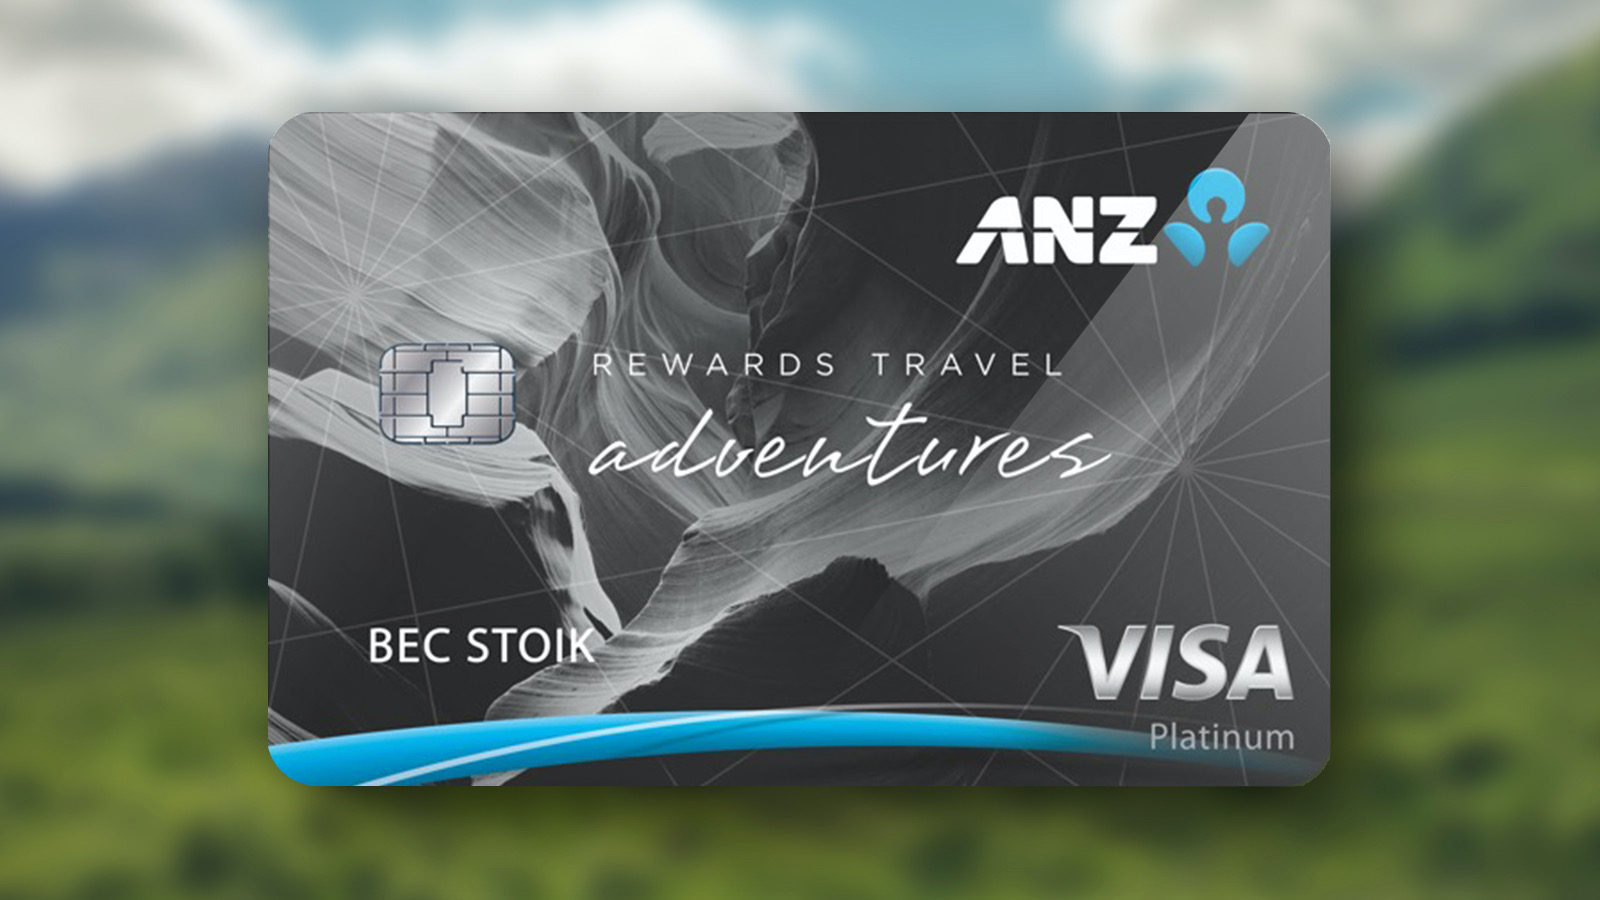 anz travel adventure card insurance